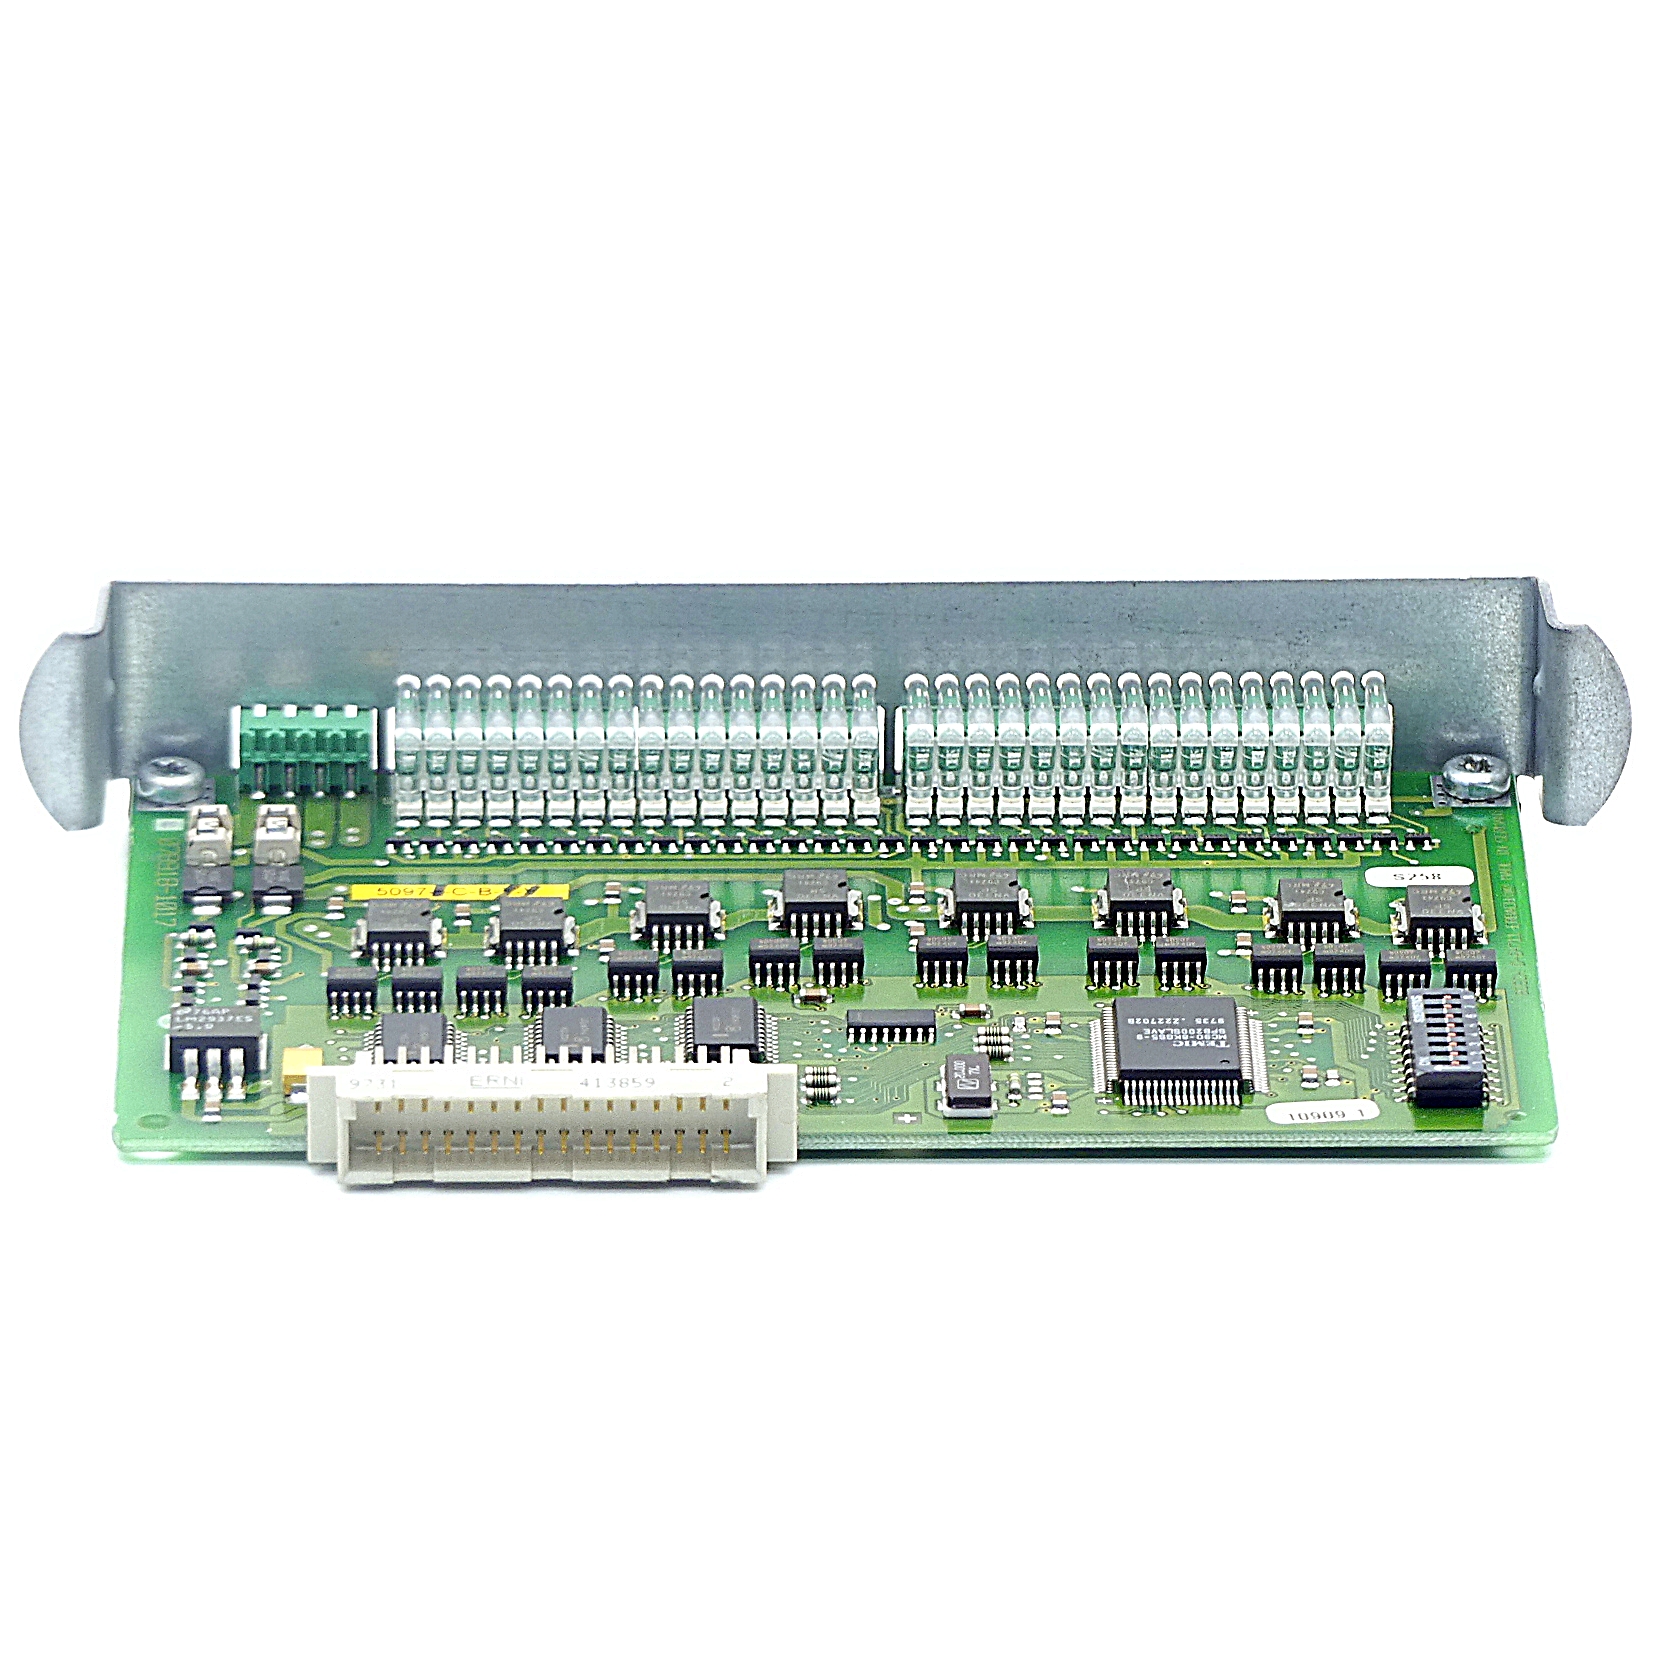 Output module A24V-C.5A 